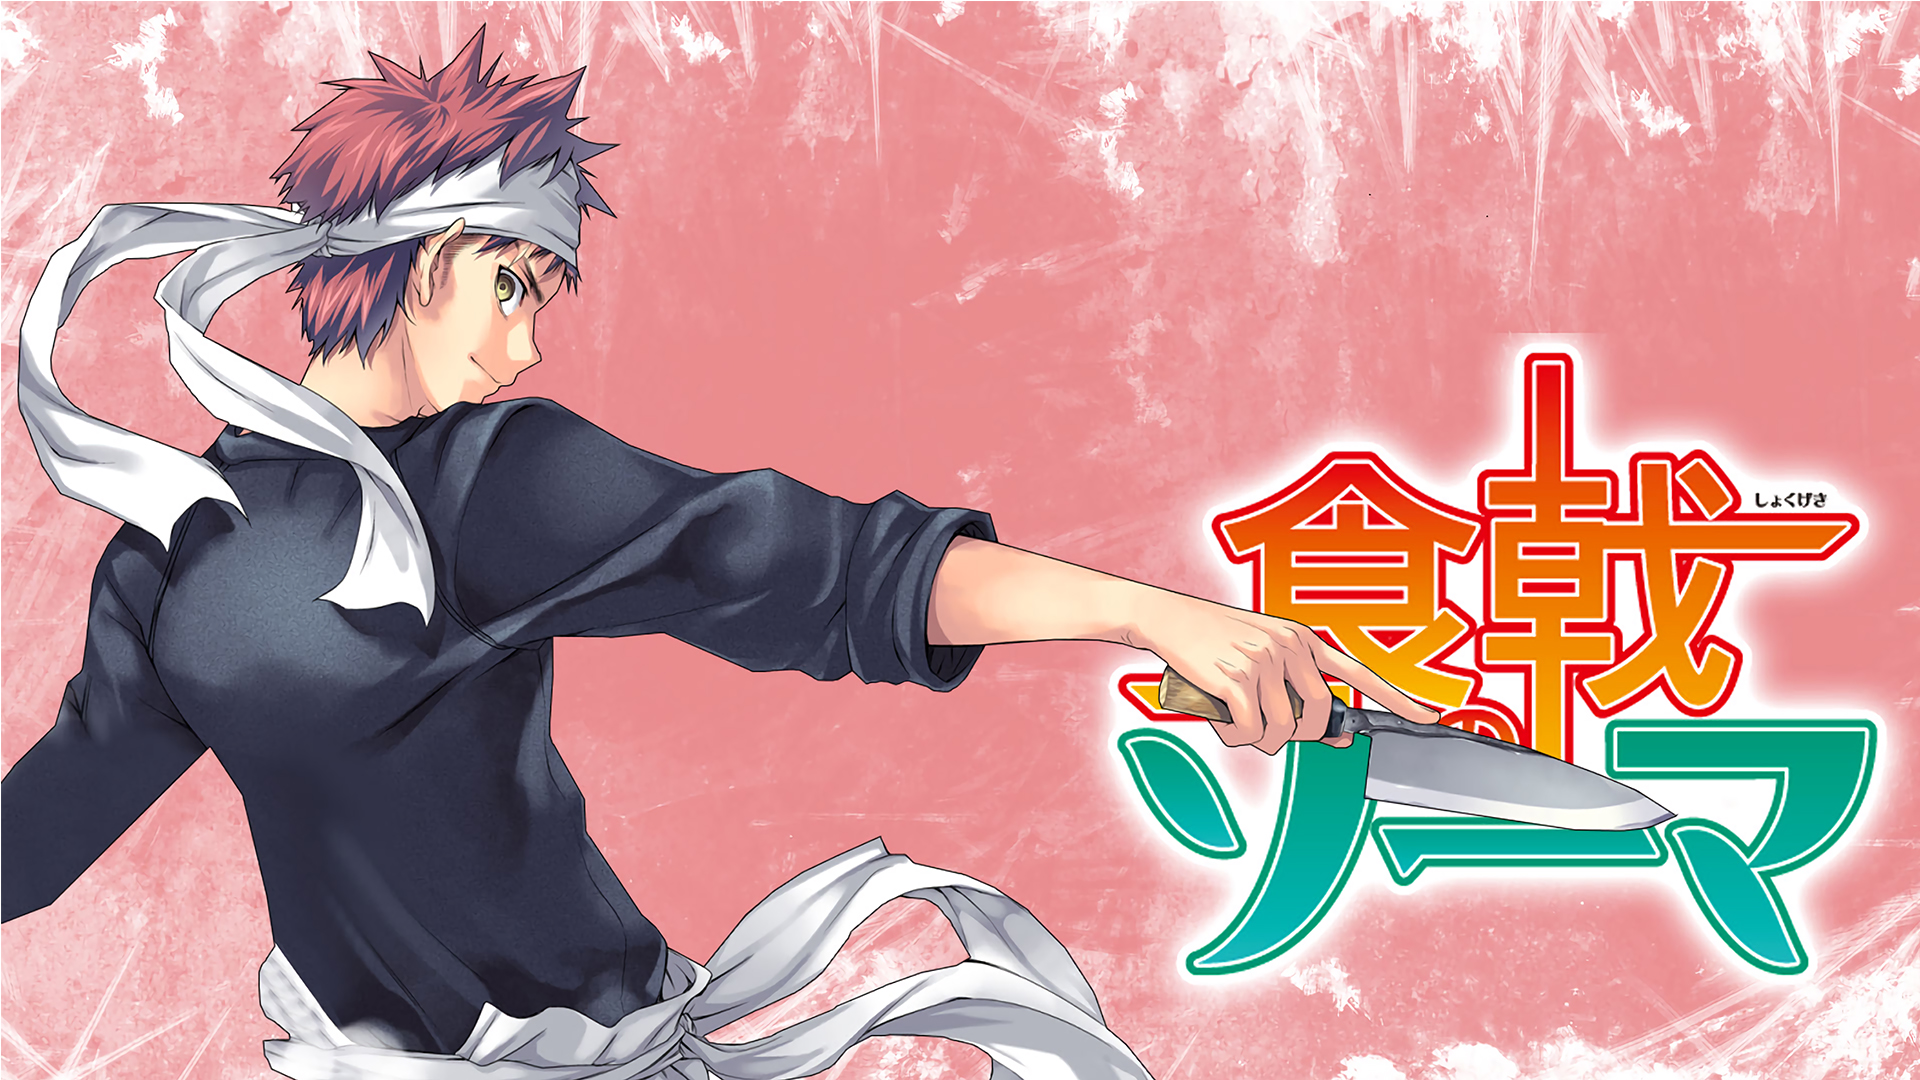 Anime Food Wars: Shokugeki no Soma Wallpaper